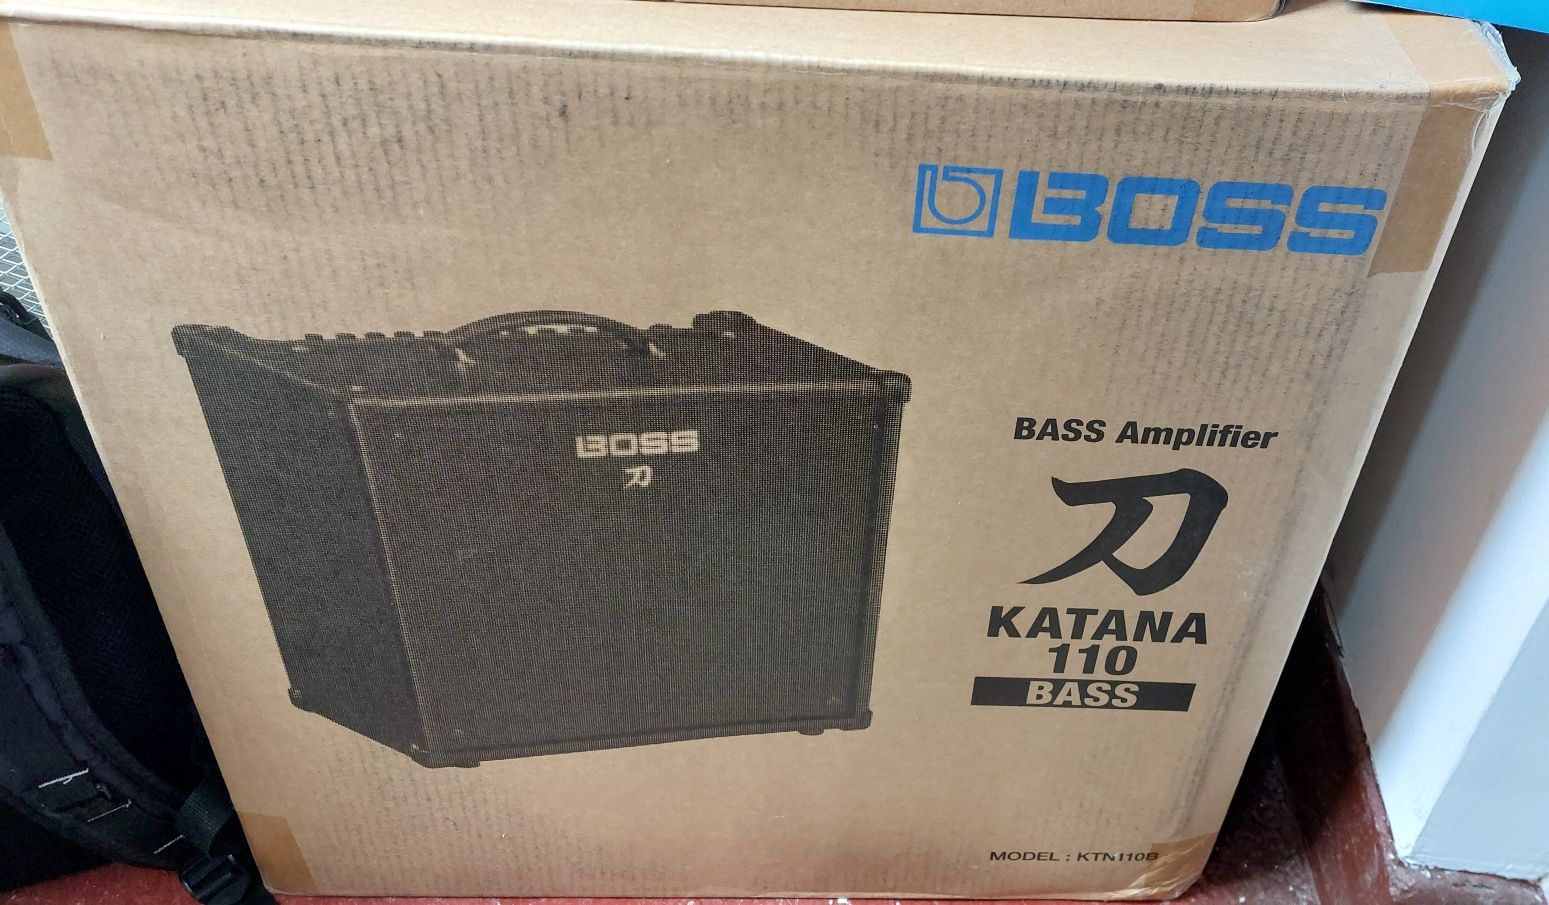 Amplificator Boss Katana-110 Bass